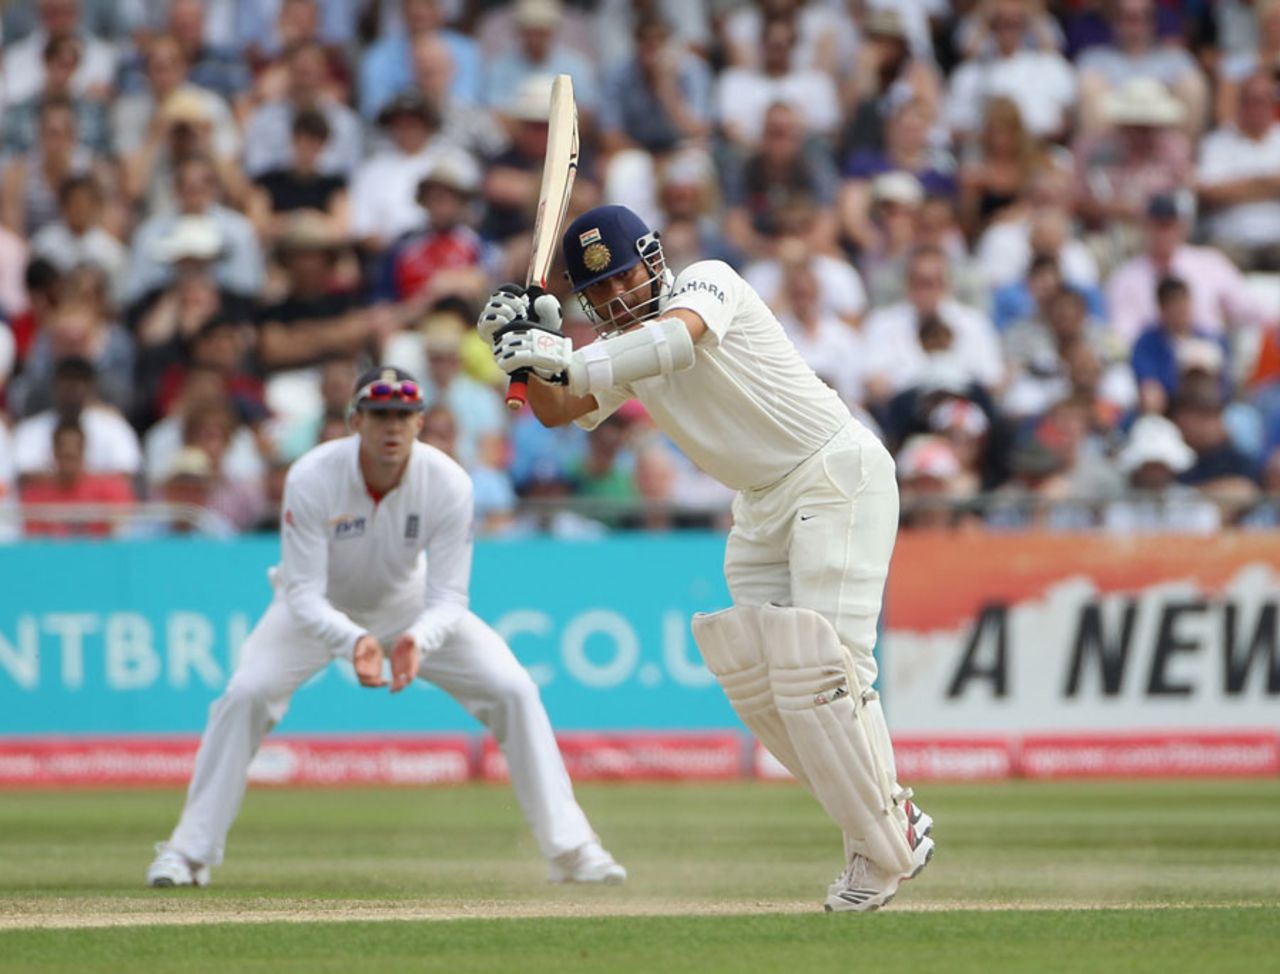 Sachin Tendulkar whips a boundary through midwicket, England v India, 2nd Test, Trent Bridge, 4th day, August 1, 2011